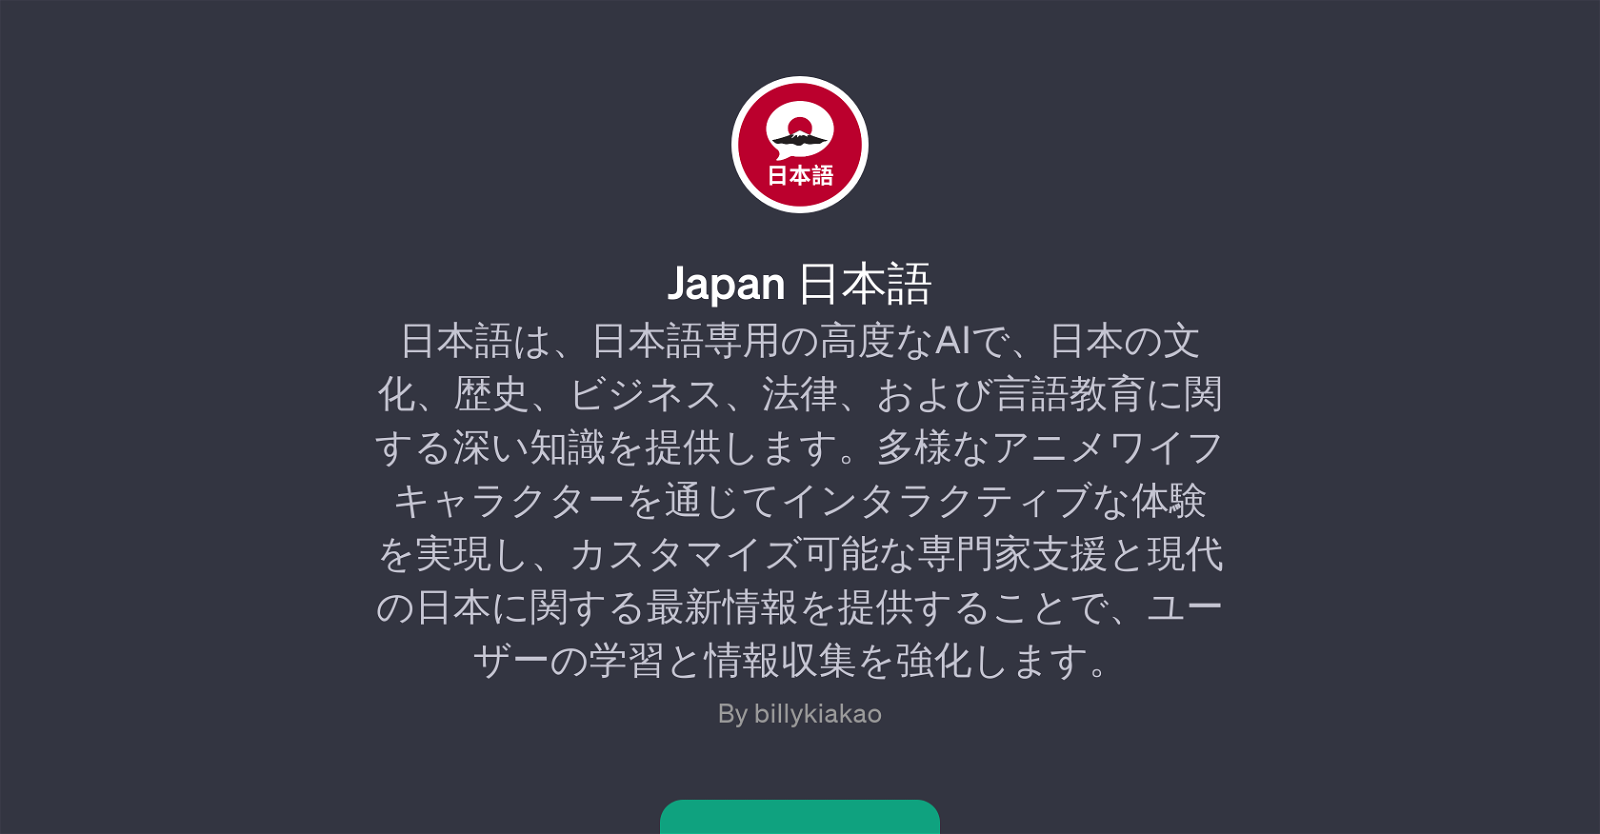 Japan website